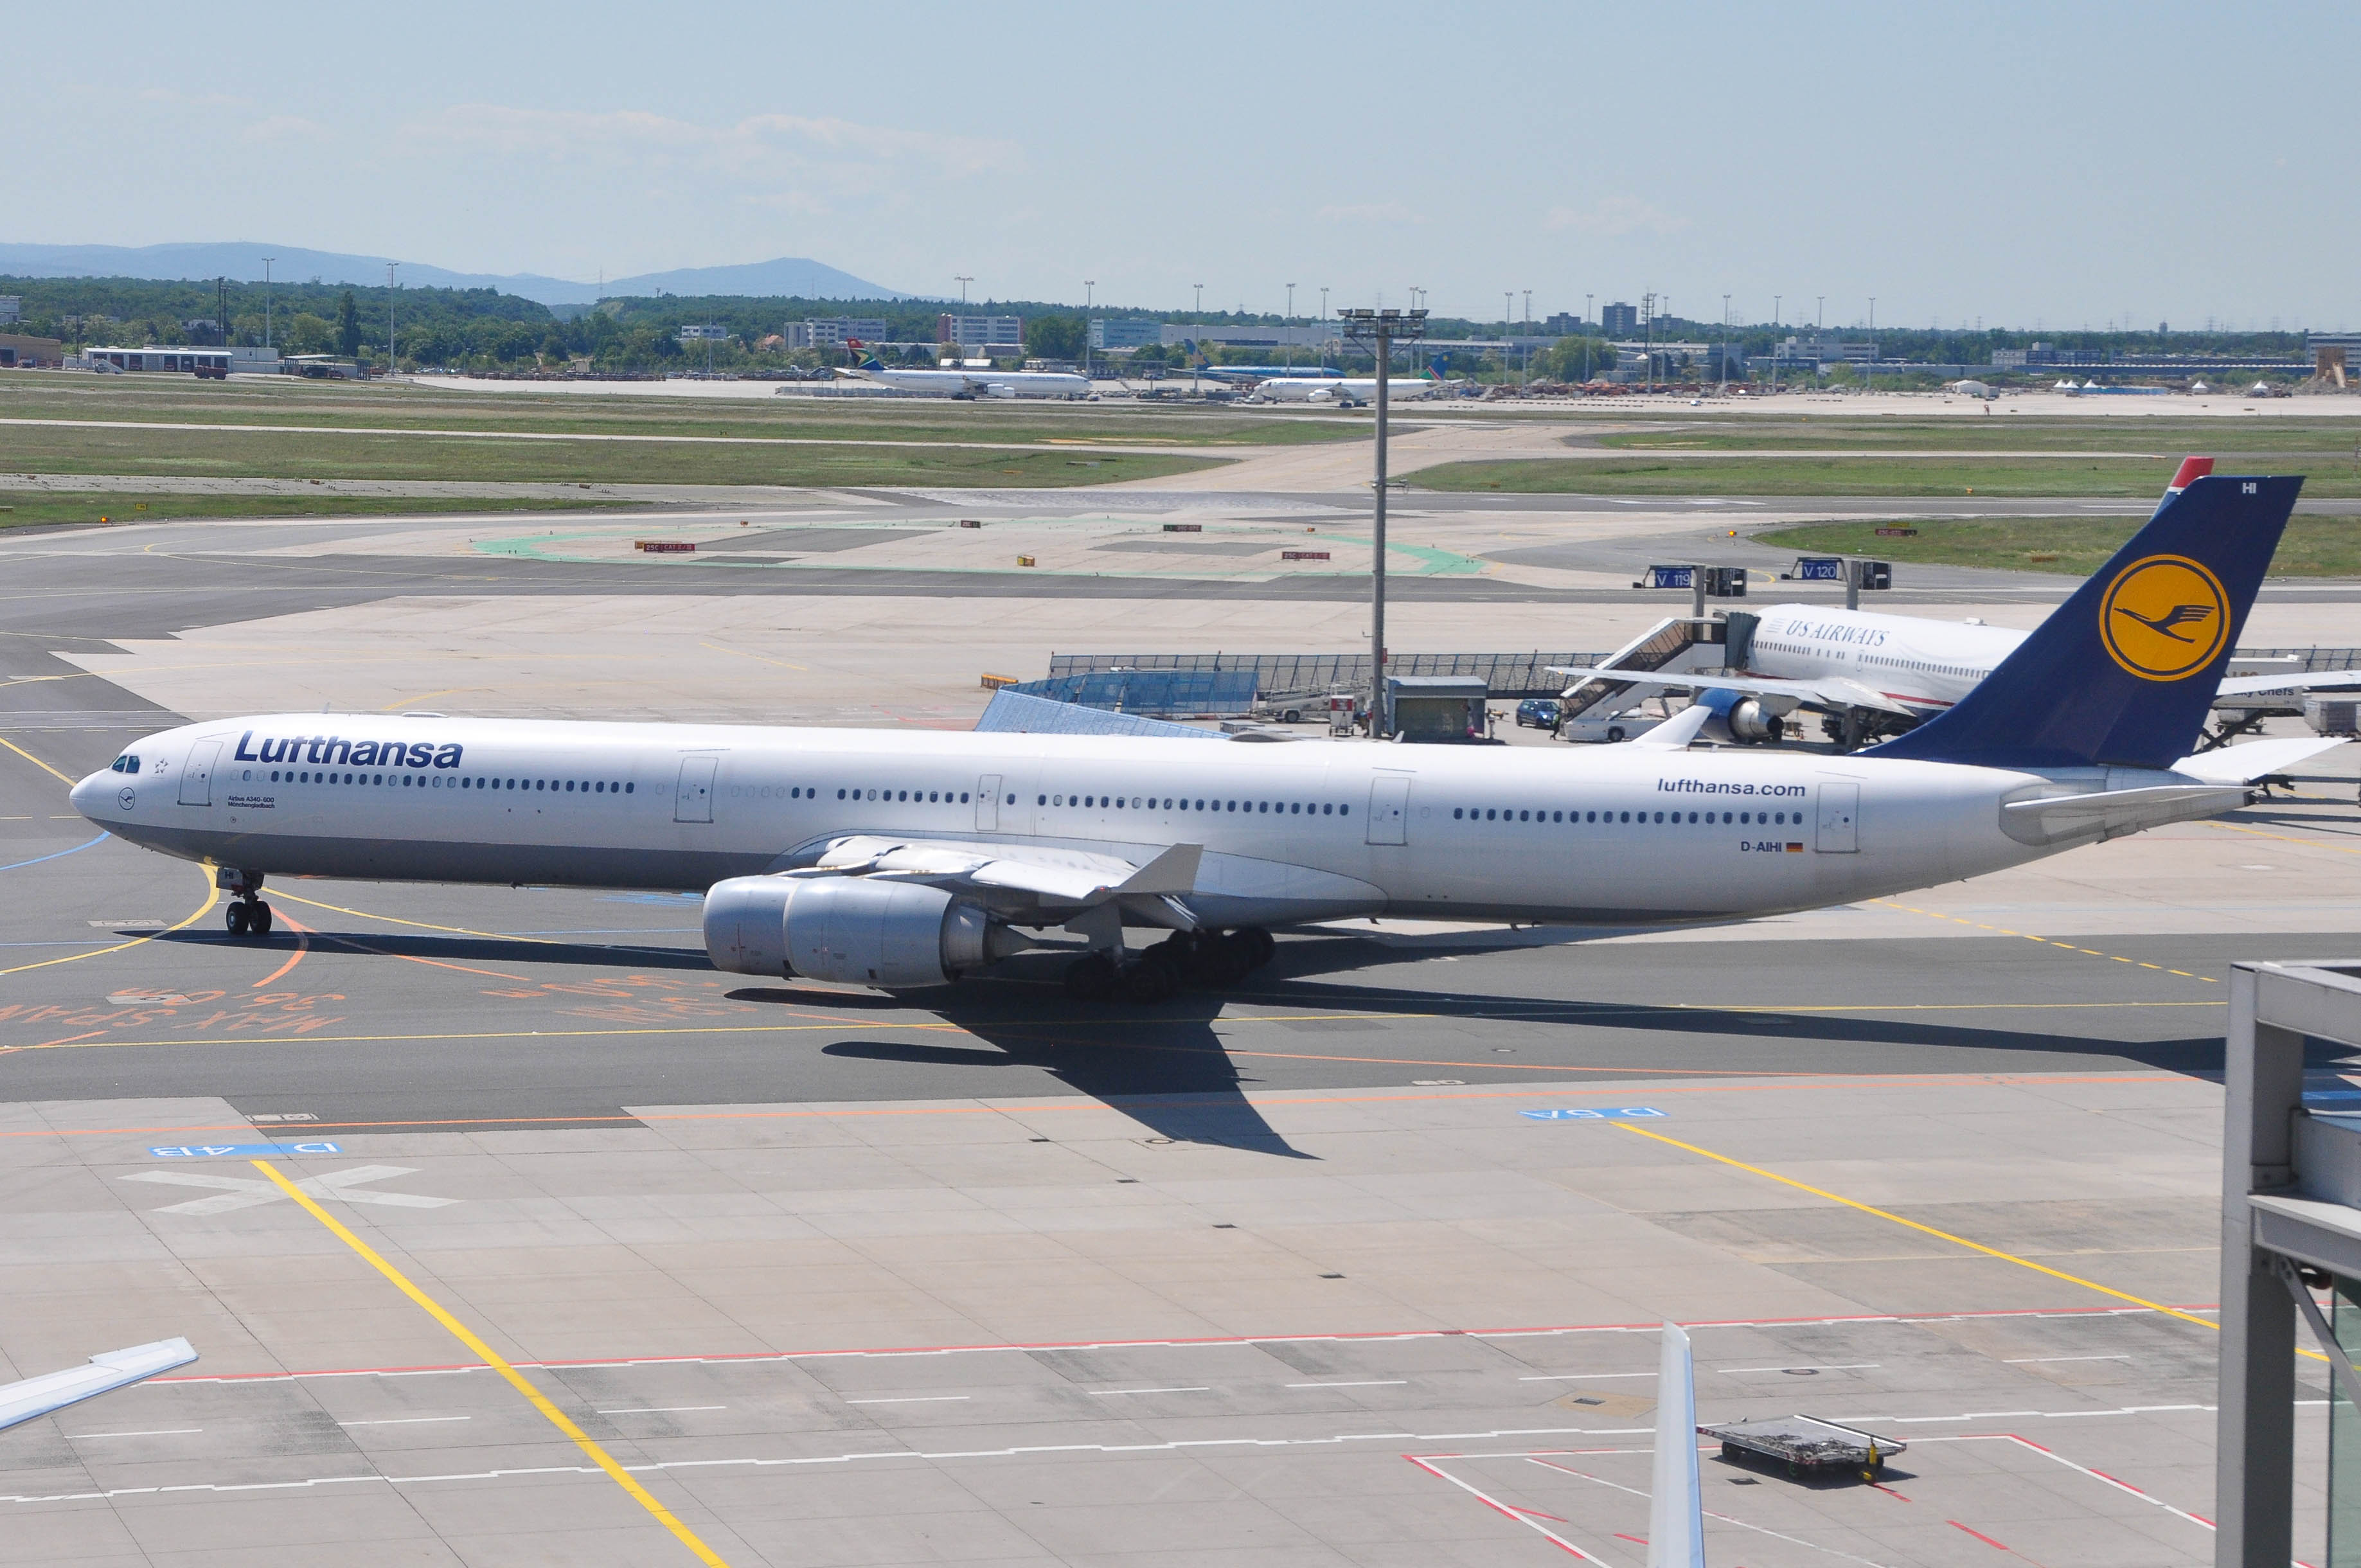 D-AIHI/DAIHI Lufthansa Airbus A340 Airframe Information - AVSpotters.com